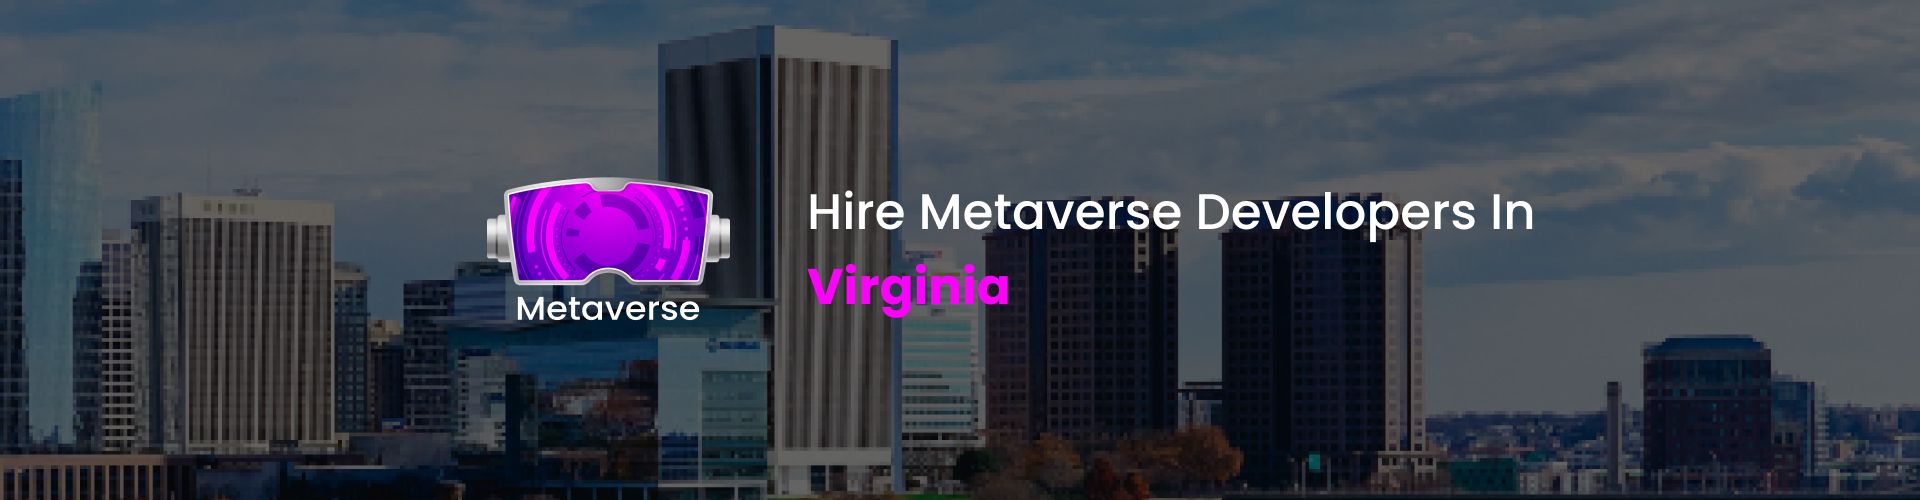 hire metaverse developers in virginia